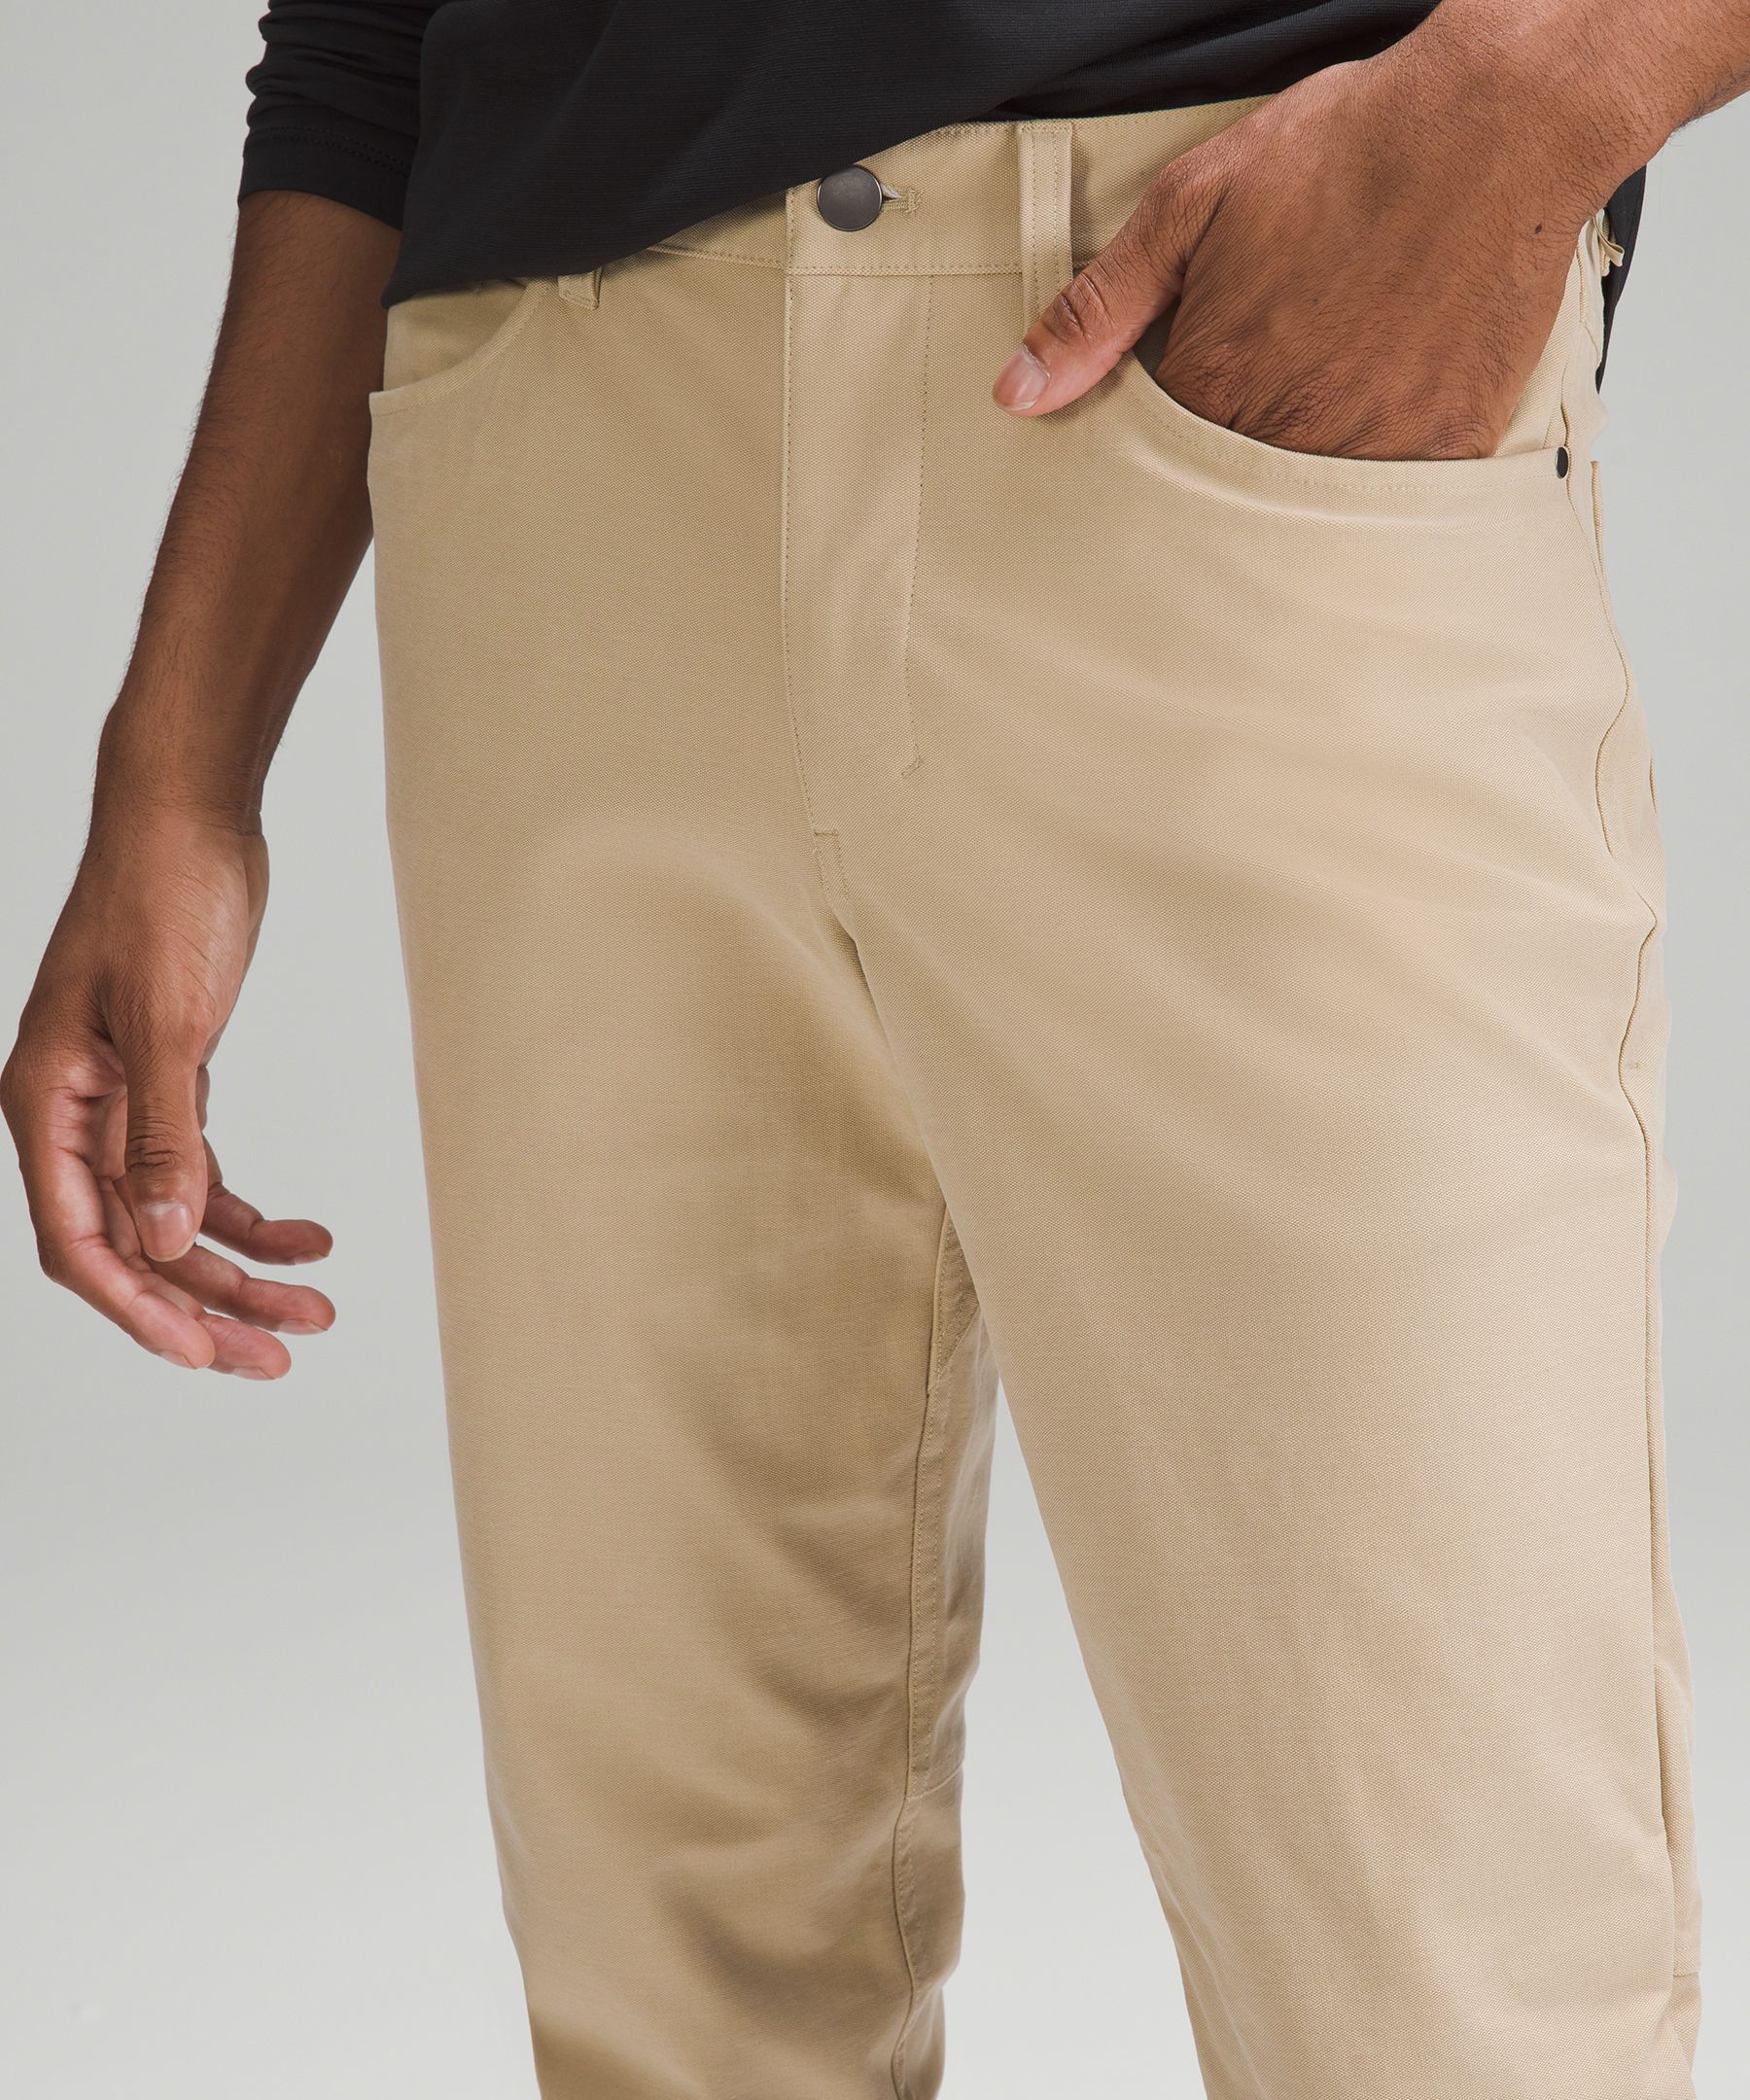 Men's Lululemon ABC Slim Fit Utilitech Pants 31x30 - Helia Beer Co